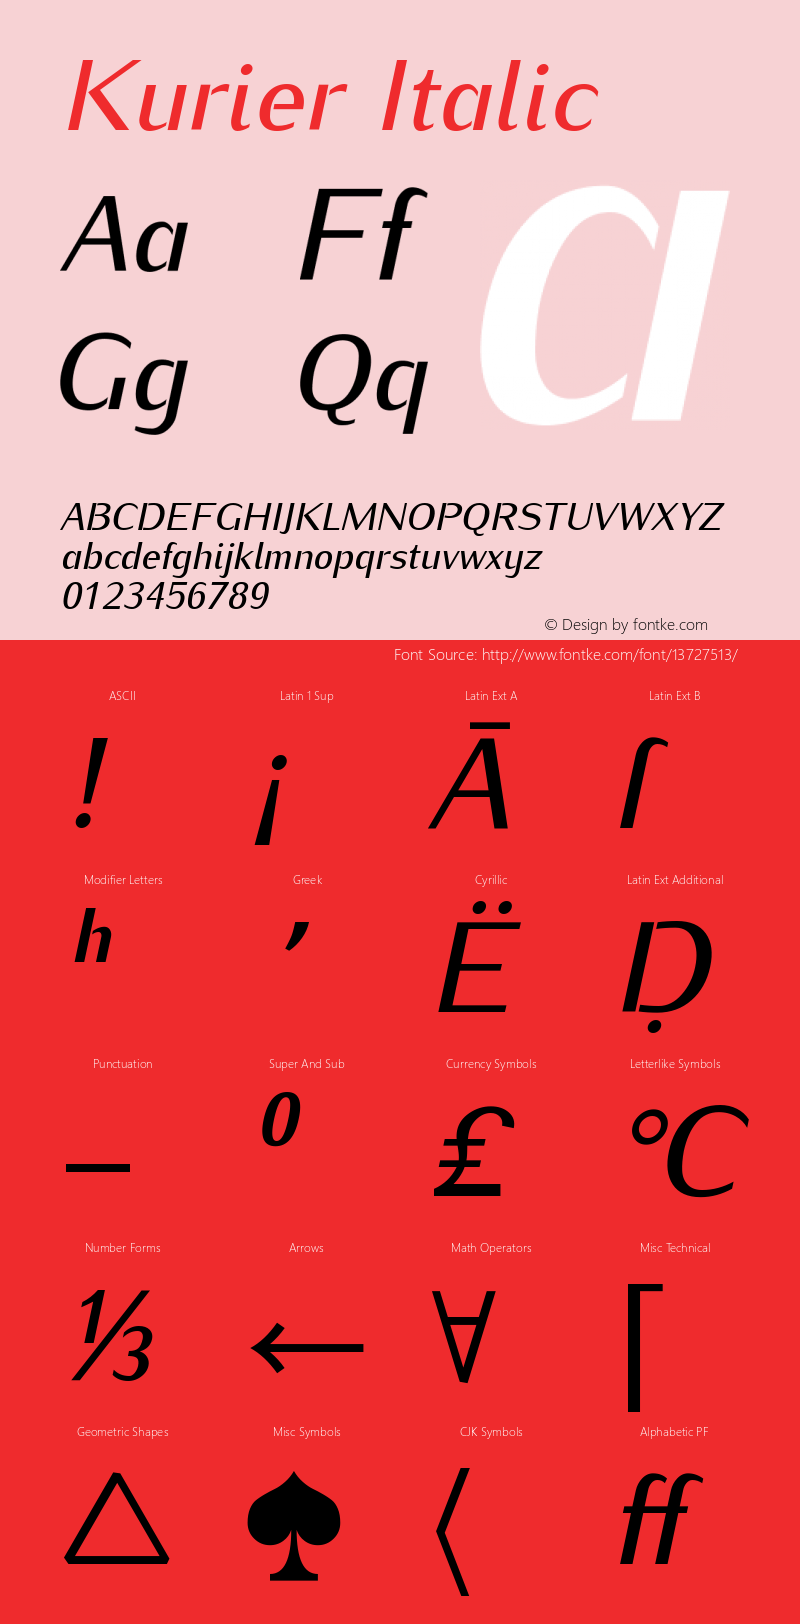 Kurier Italic Version 0.995 Font Sample